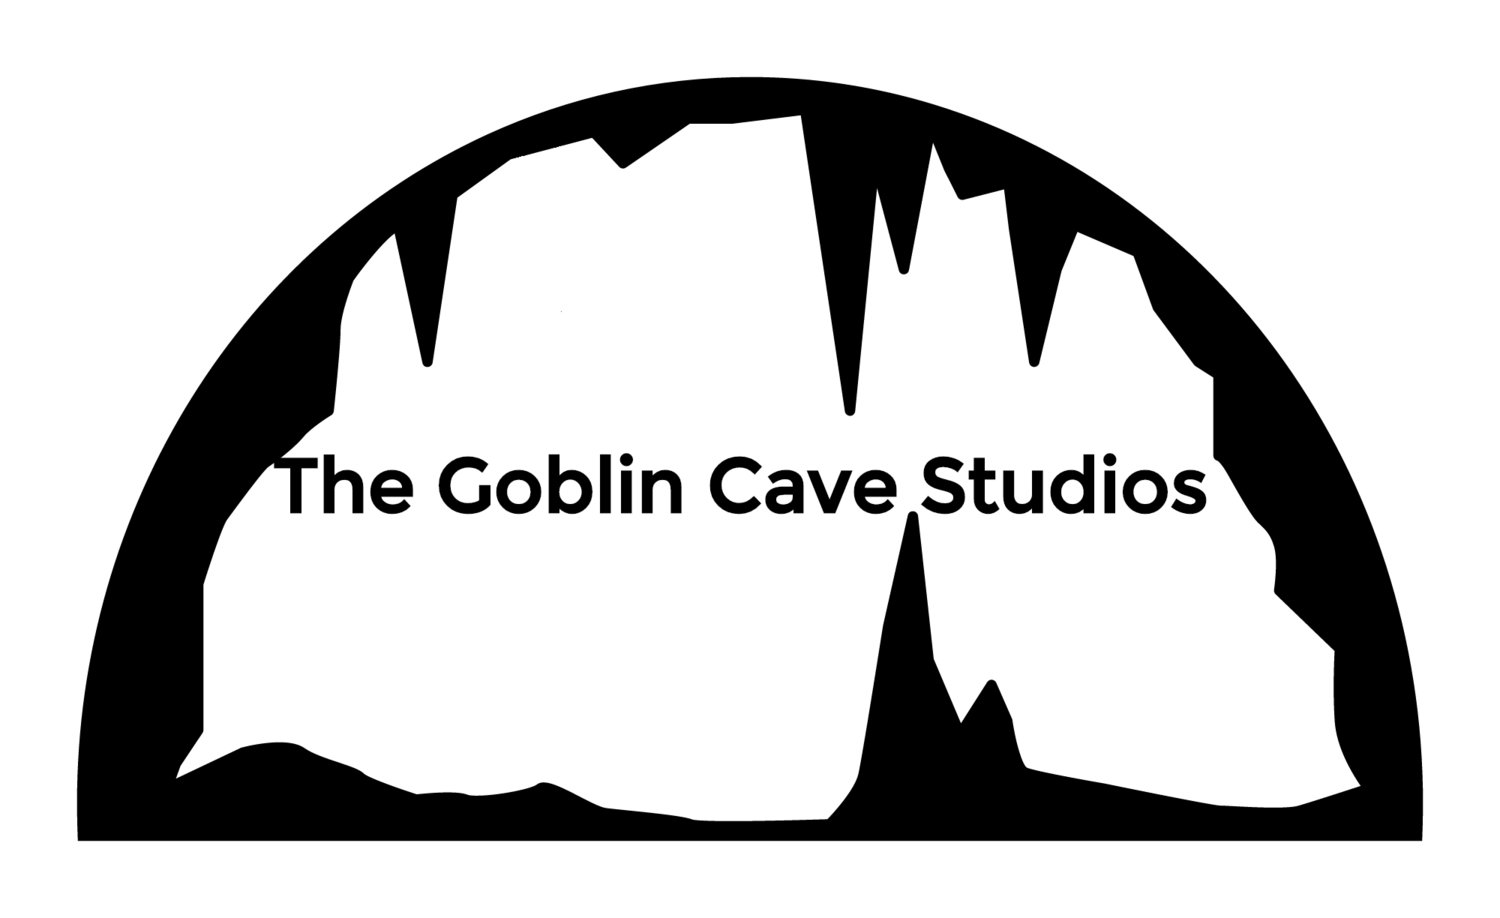 The Goblin Cave Studios